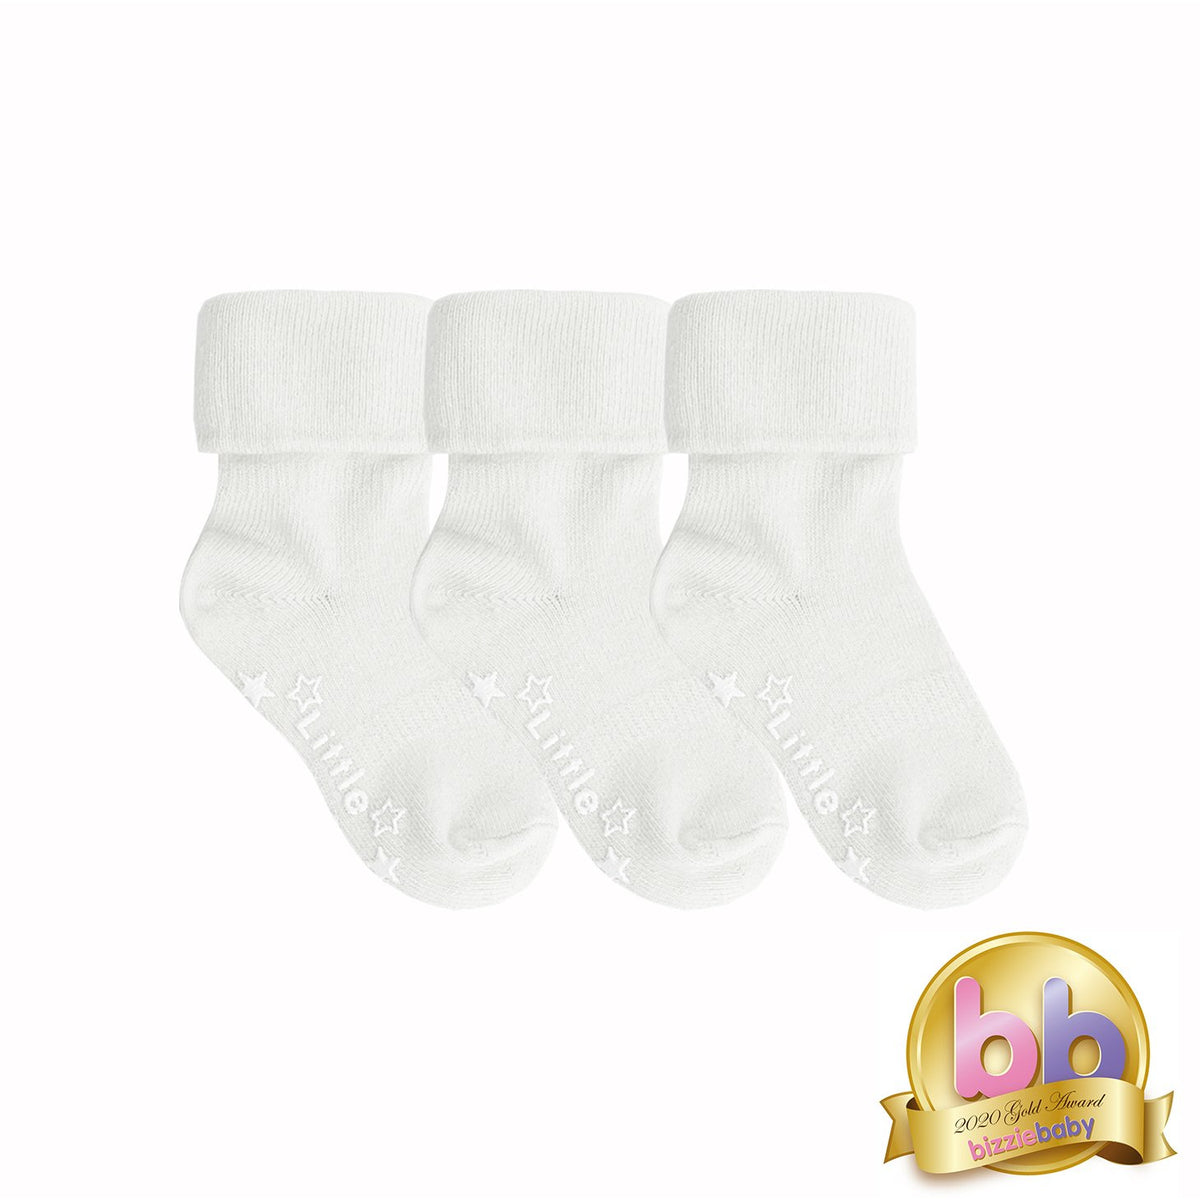 Non-Slip Stay On Baby and Toddler Socks - 3 Pack in Plain Snow White